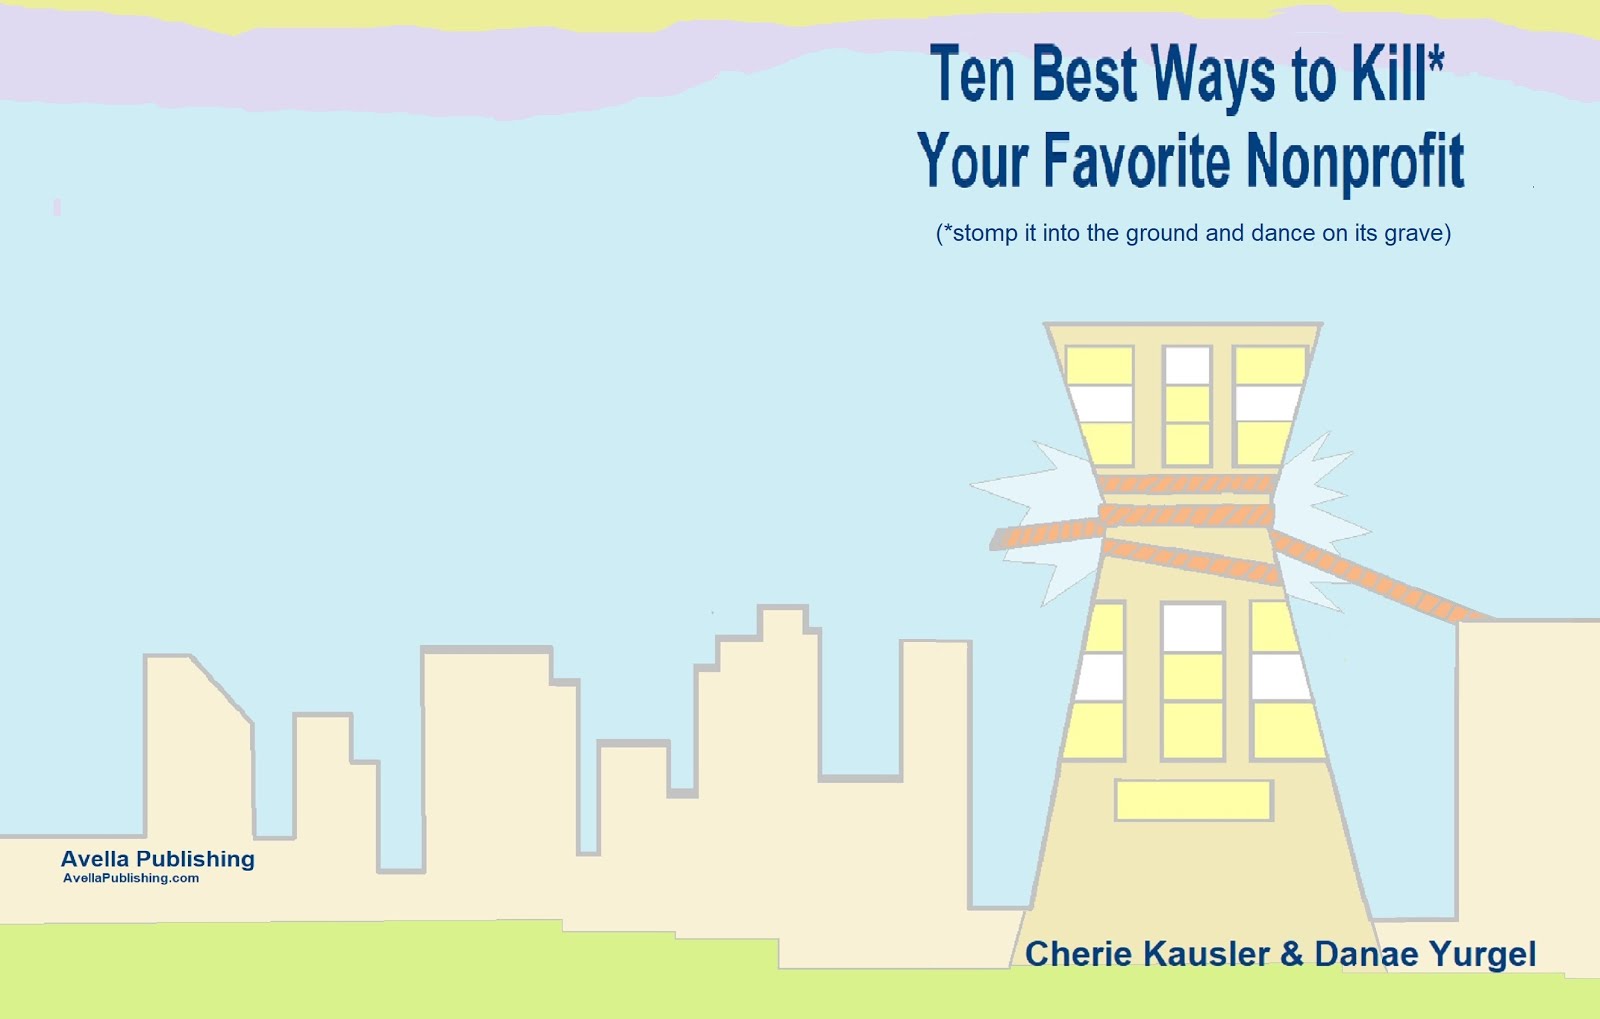 "Ten  Best Ways To Kill* Your Favorite Nonprofit"